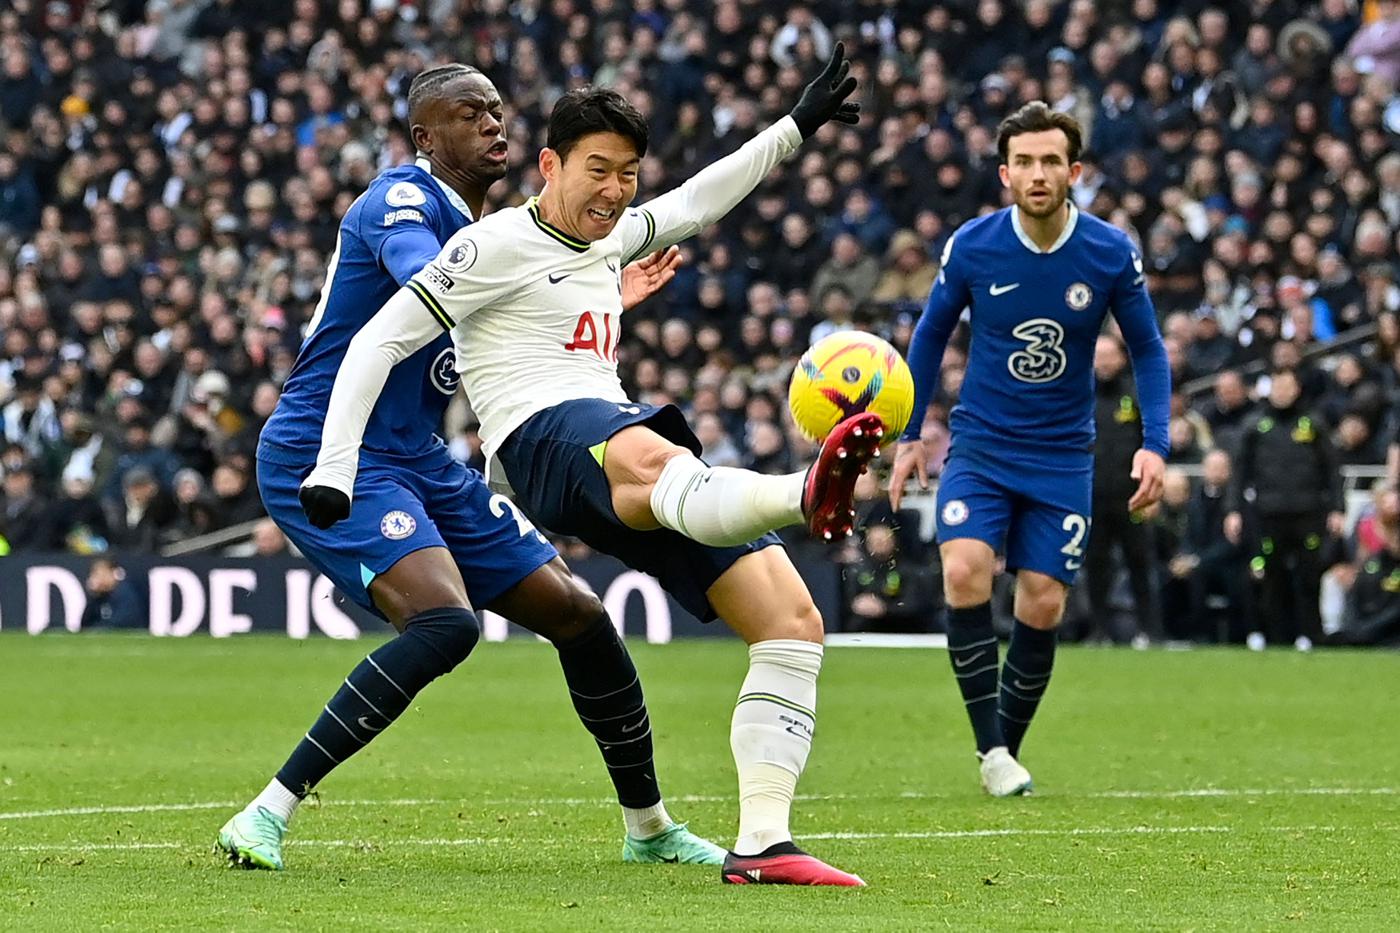 Tottenham vs Chelsea 2-0. English Premier League, 25th round. Match review, statistics